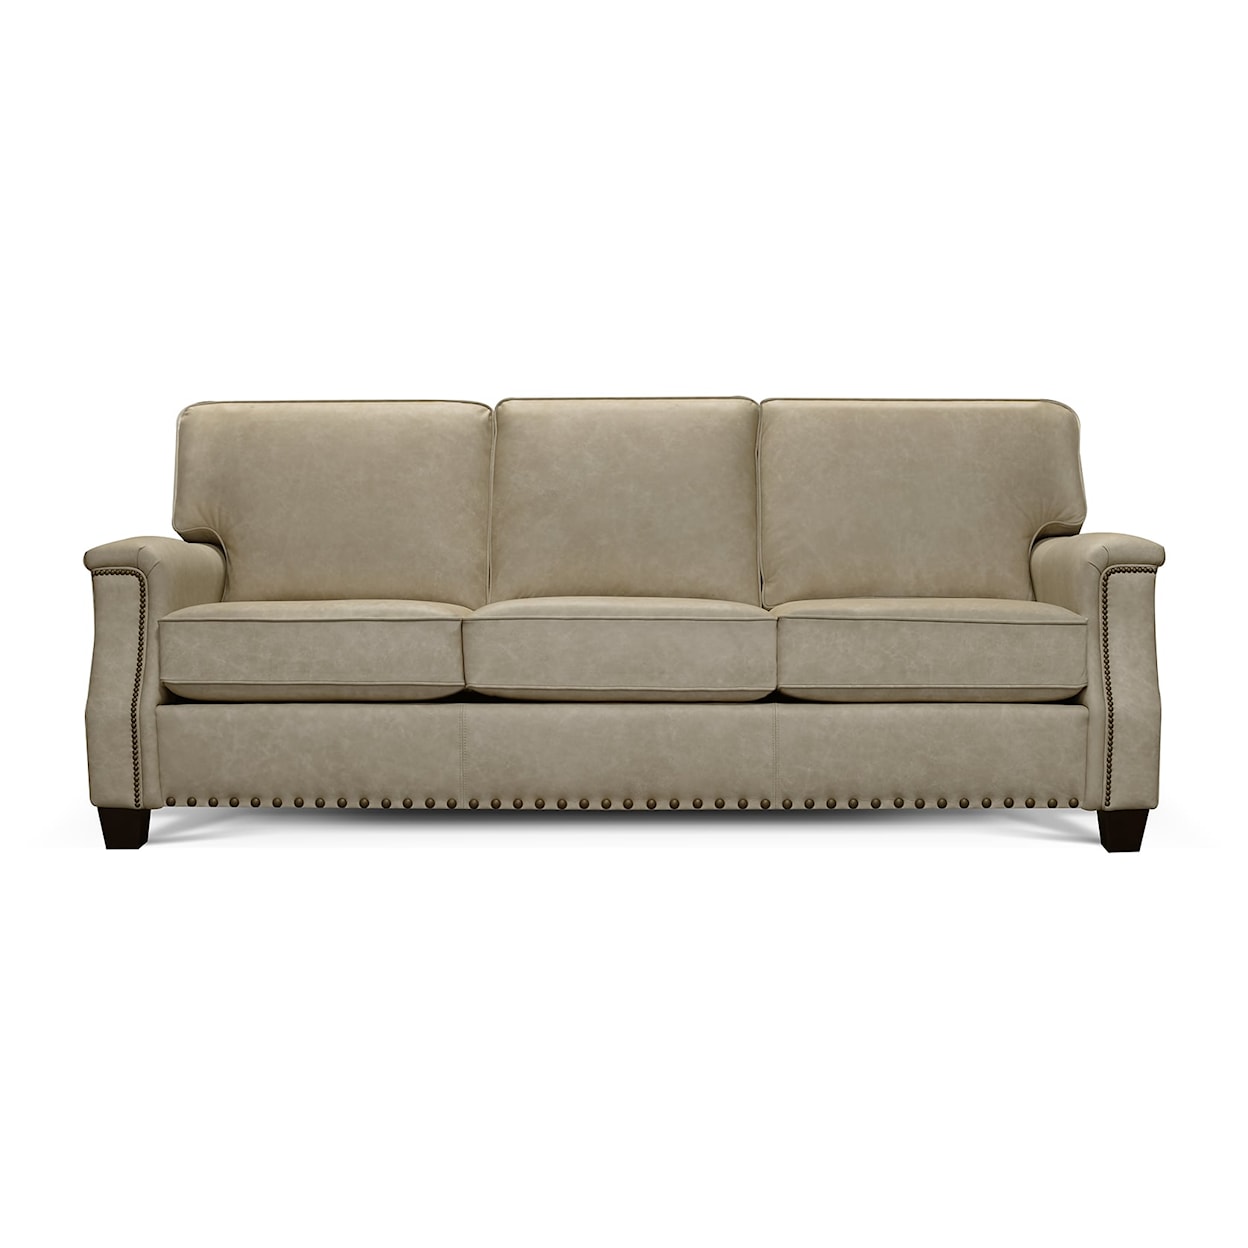 England 5300AL/N Series Leather Sofa